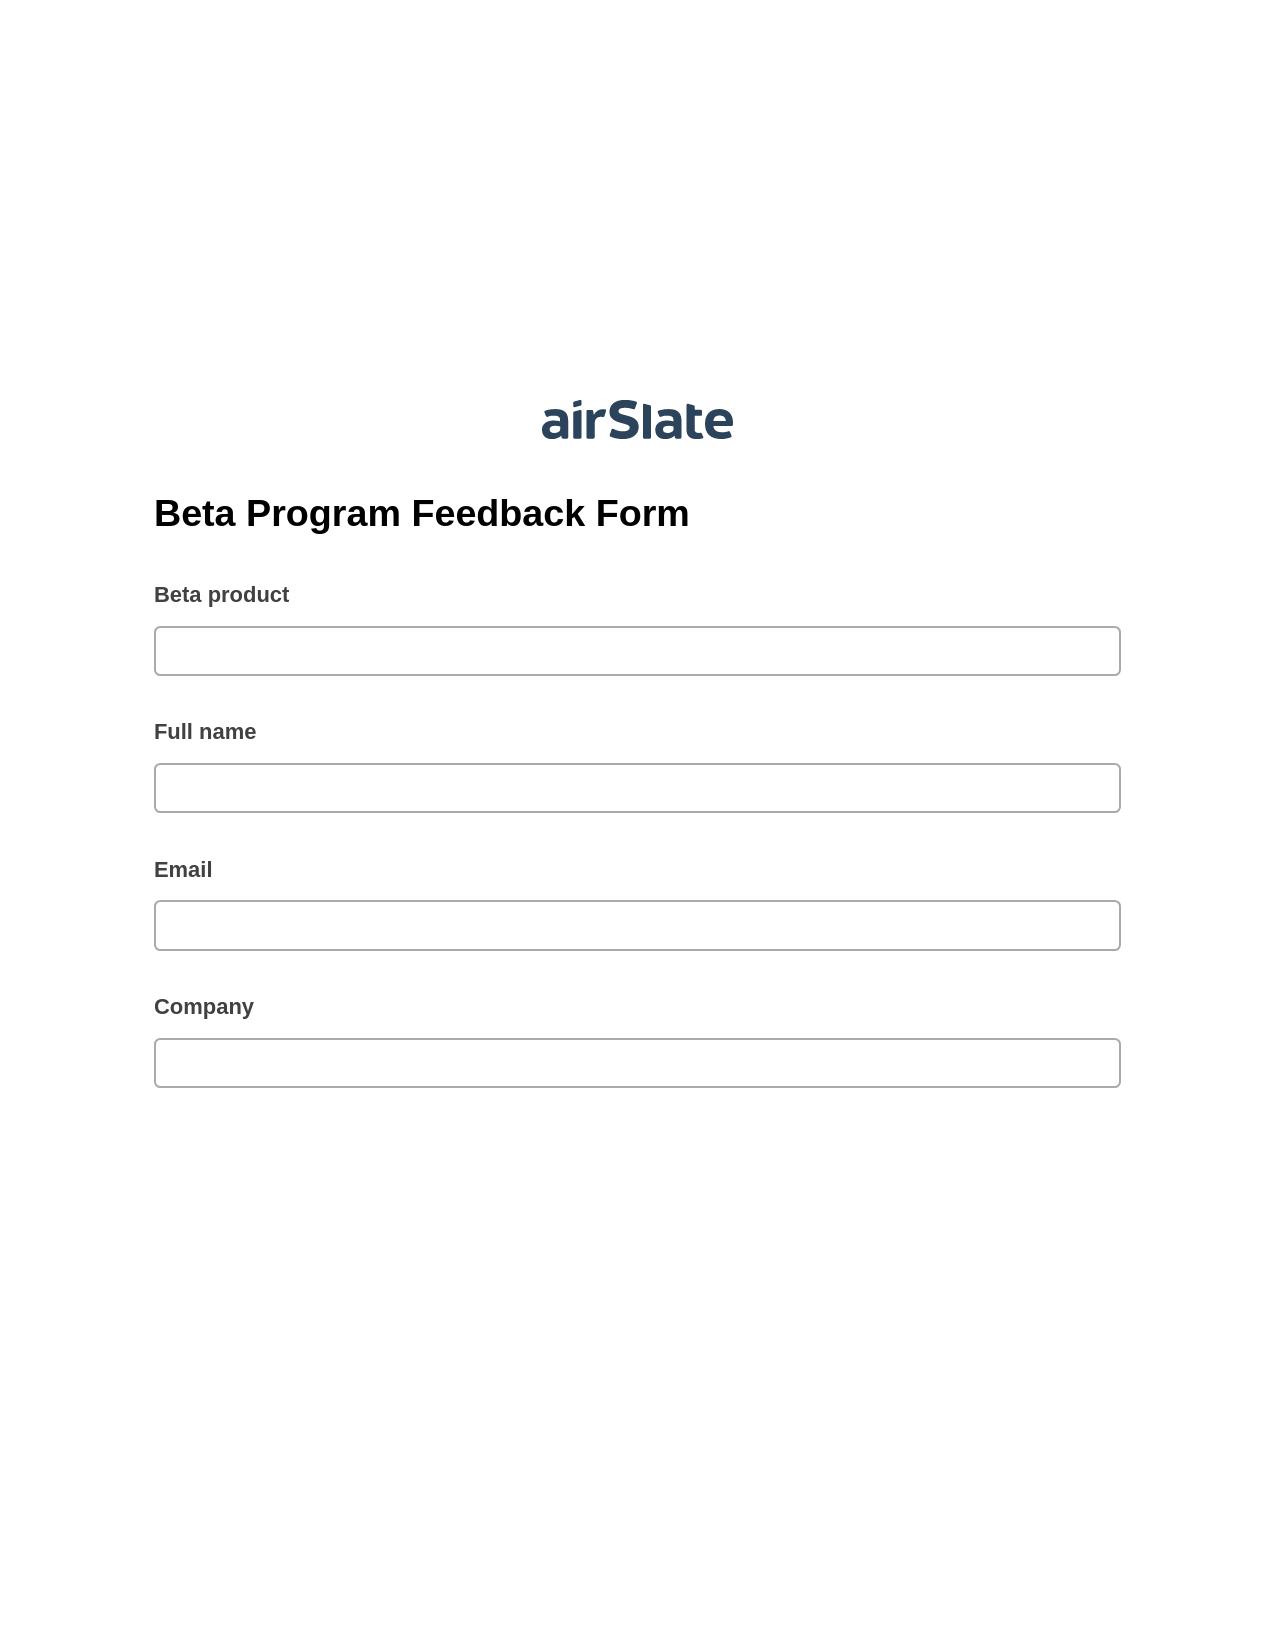 Beta Program Feedback Form Pre-fill Dropdowns from Excel Bot, SendGrid send Campaign bot, Google Drive Bot